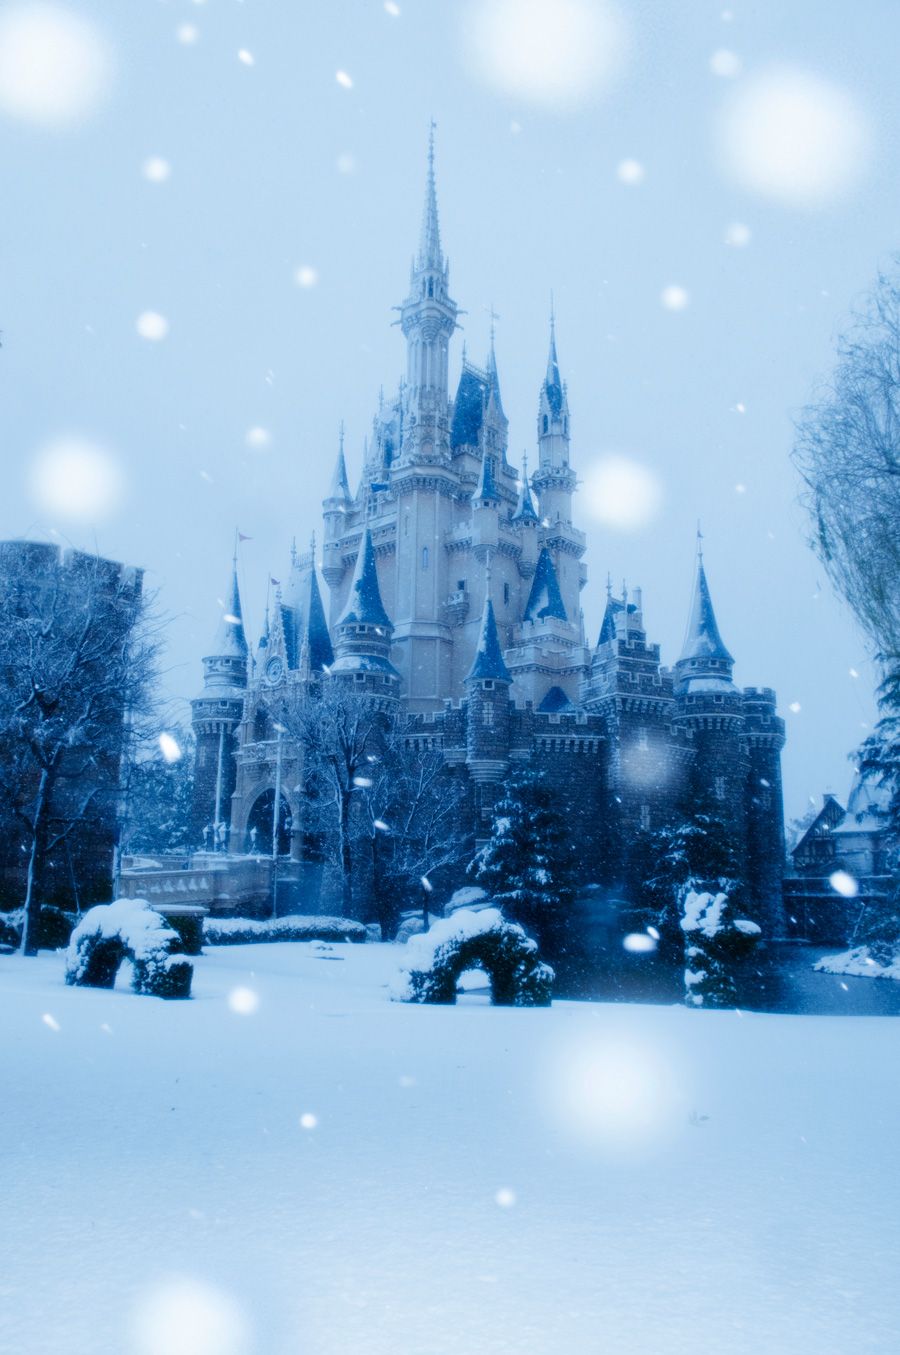 Free download Tokyo Disney Resort Into a Winter Wonderland Disney Parks Blog [900x1355] for your Desktop, Mobile & Tablet. Explore Disney Winter Wallpaper. Free Disney Desktop Wallpaper Background, Disney